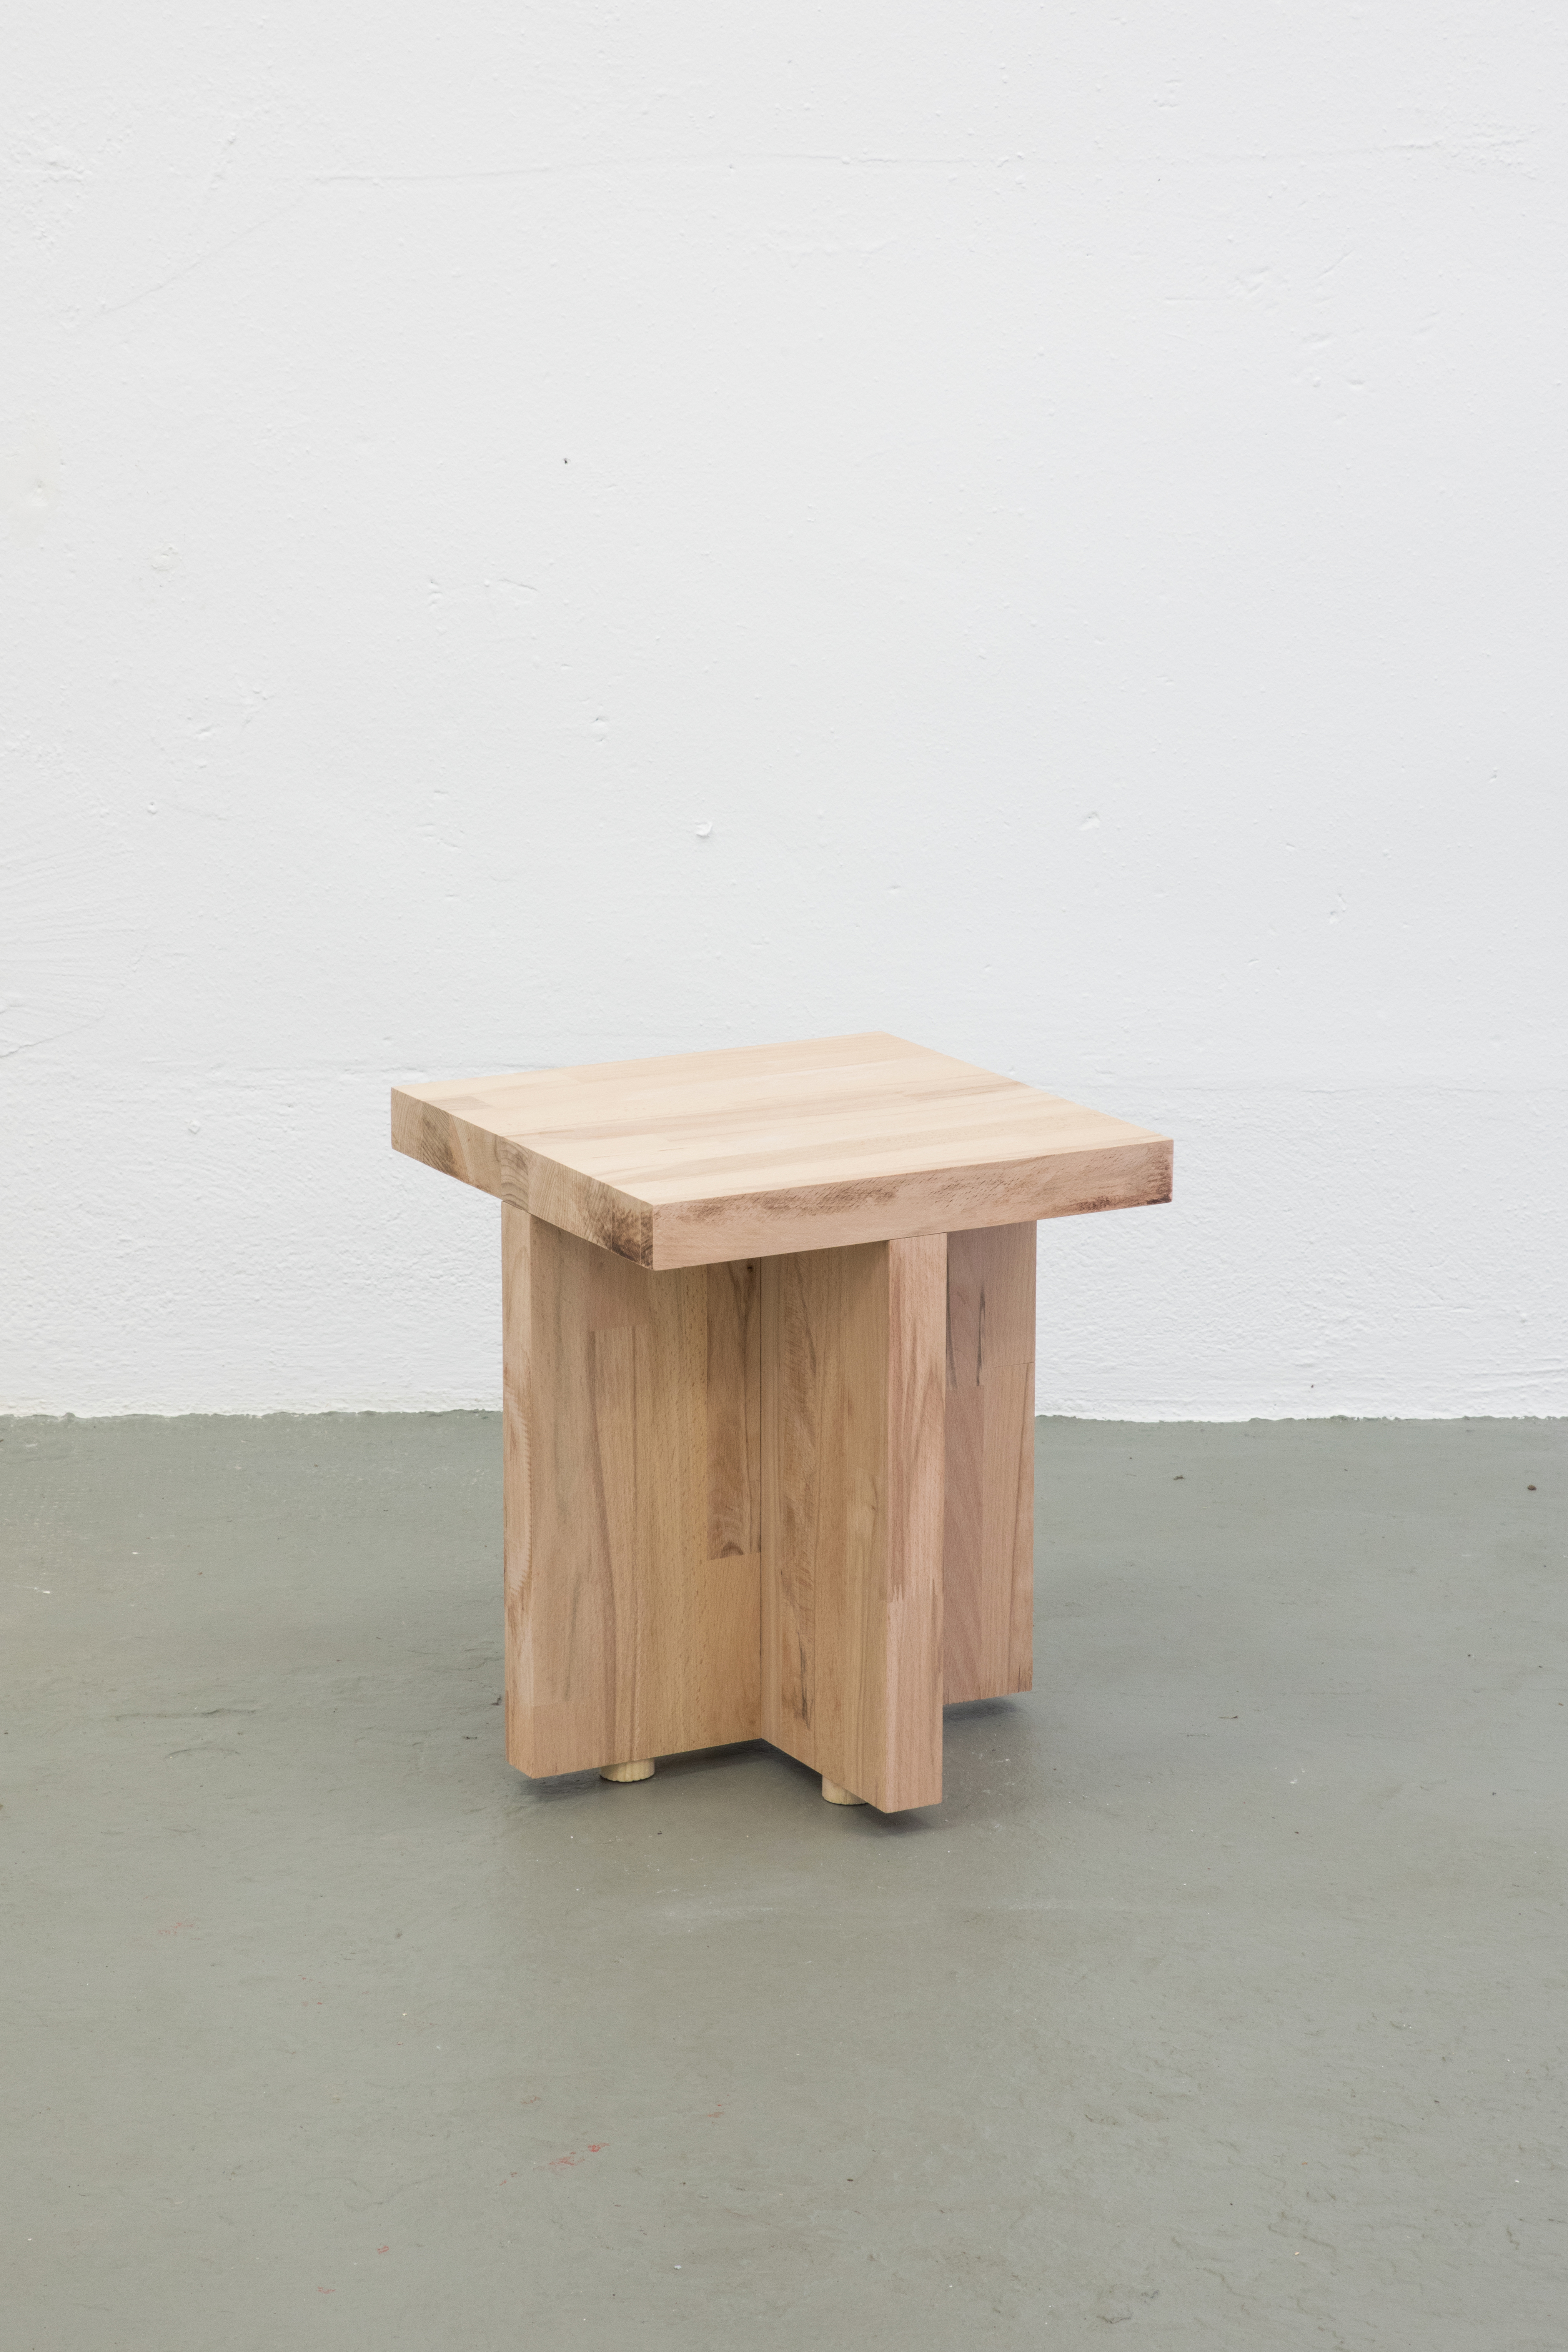 Lino Santo, *MTTS*, wood